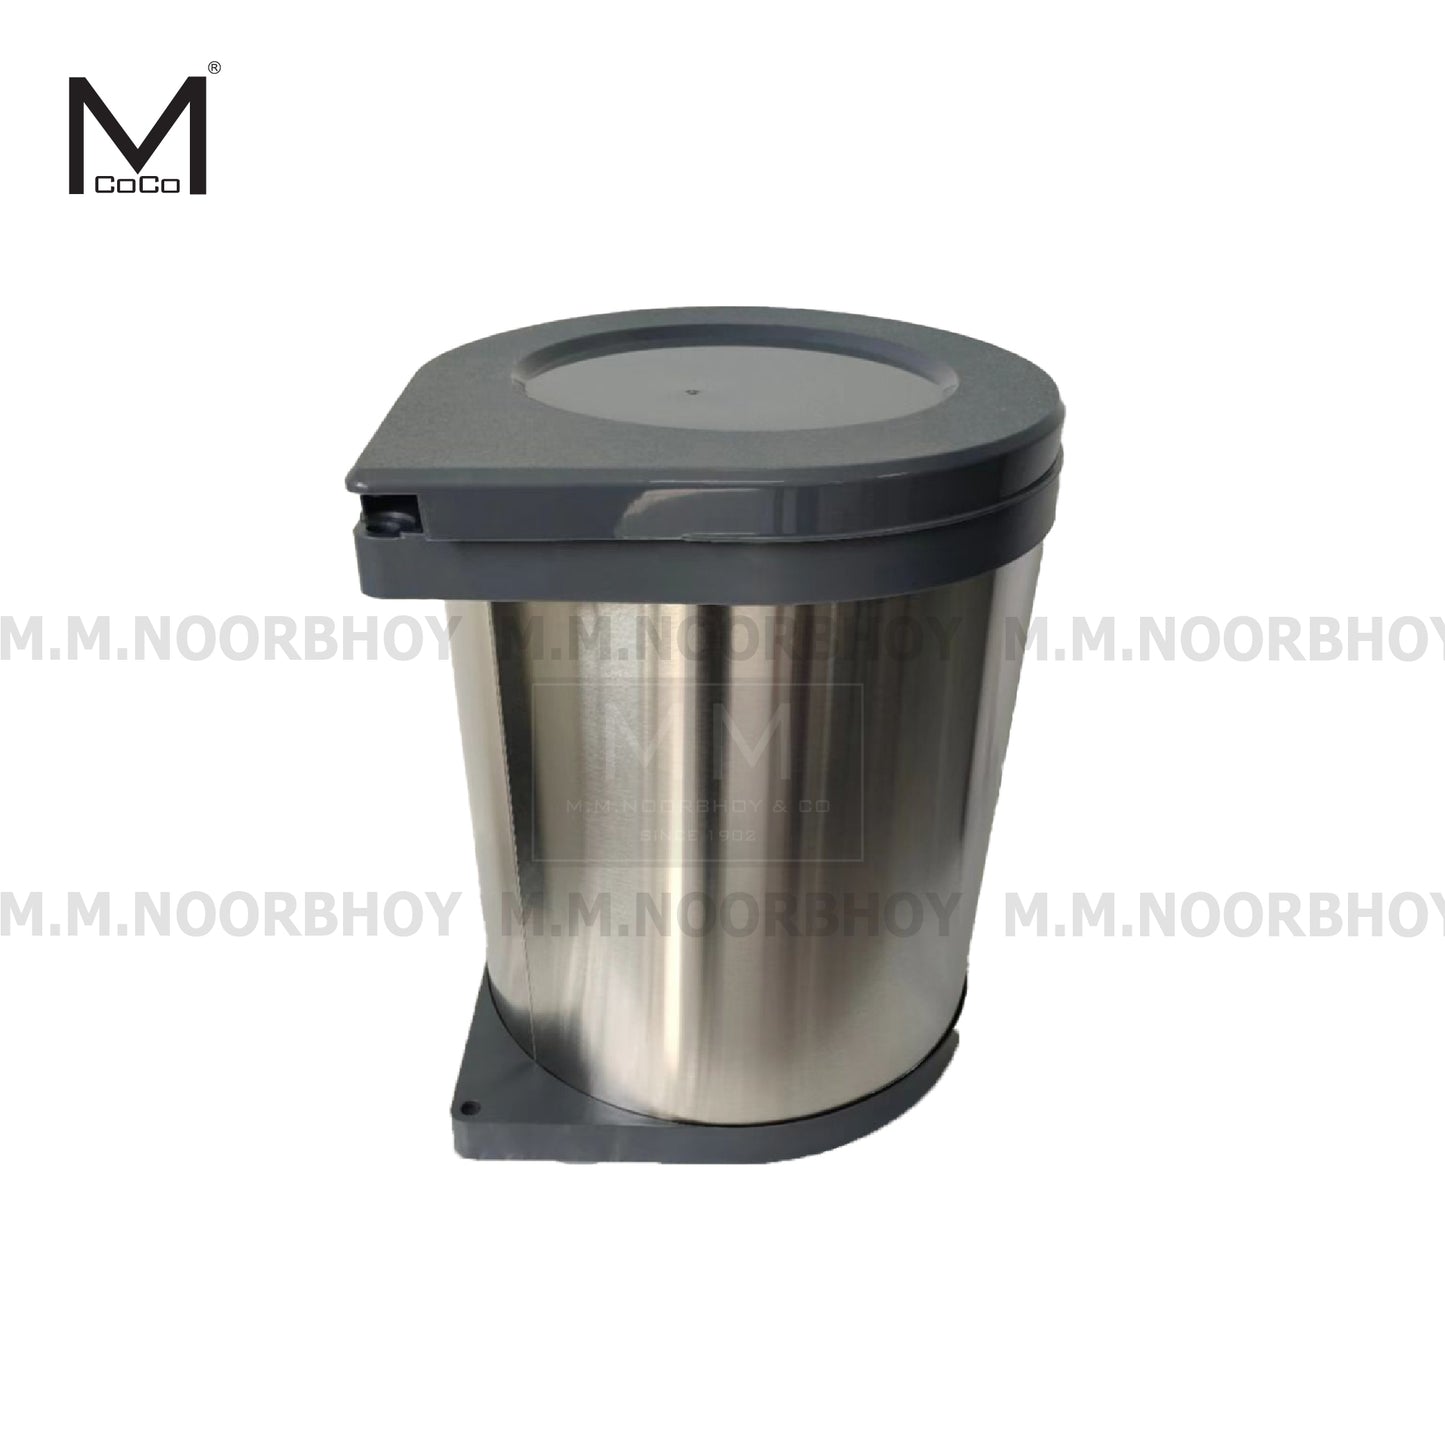 Mcoco Waste Bin Round Side Mount Stainless Steel Grey Colour - JC635